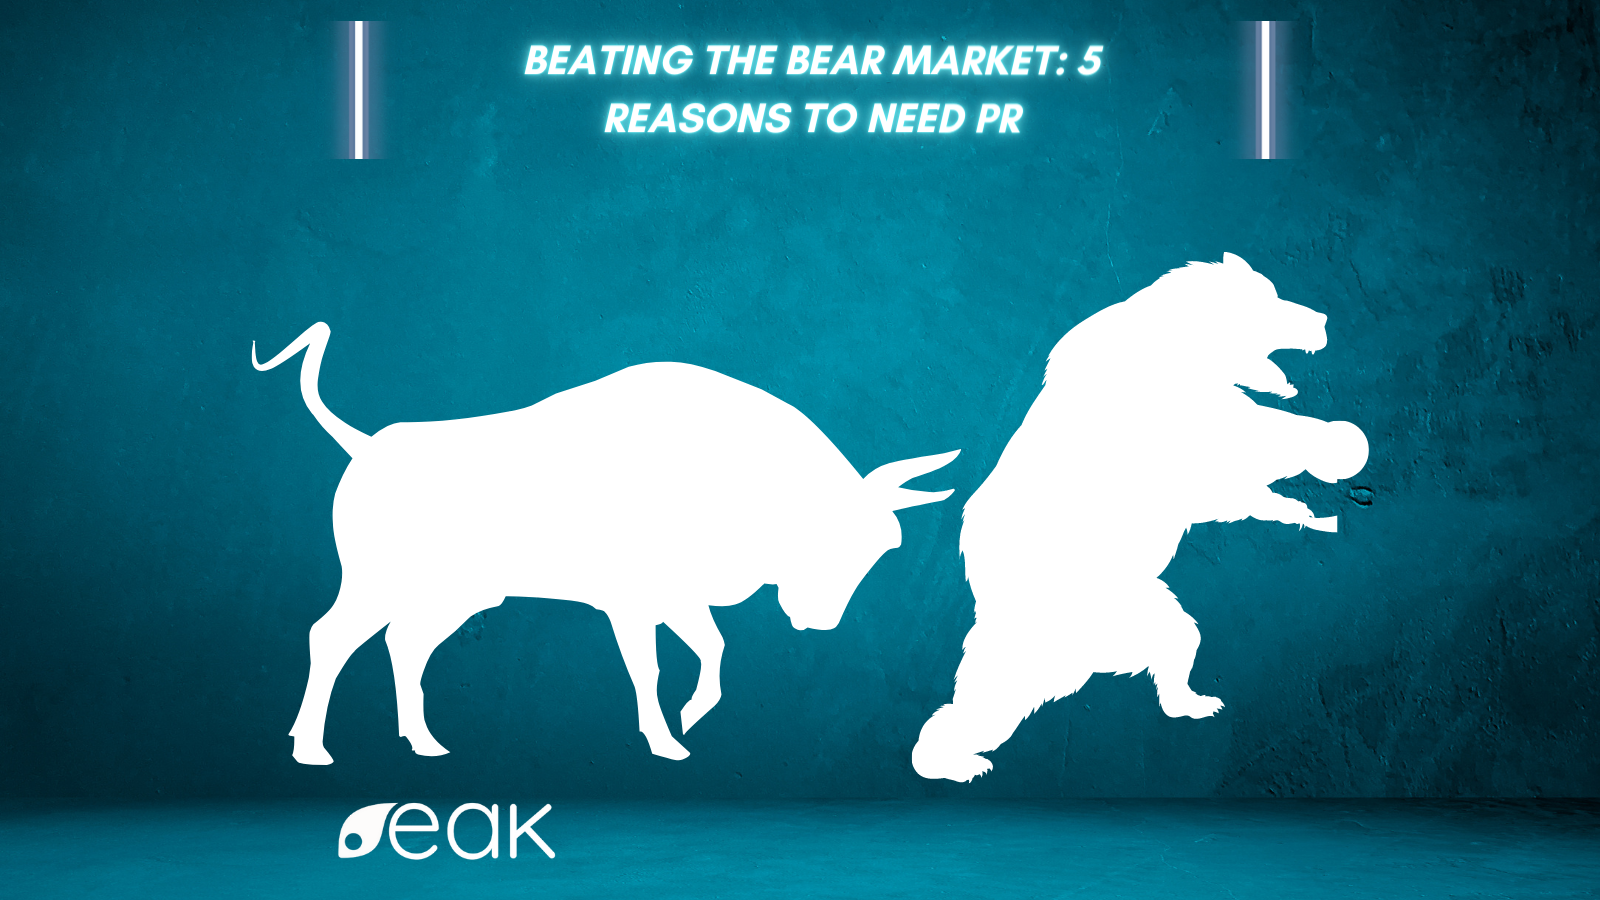 Beating the bear market: 5 reasons to need PR